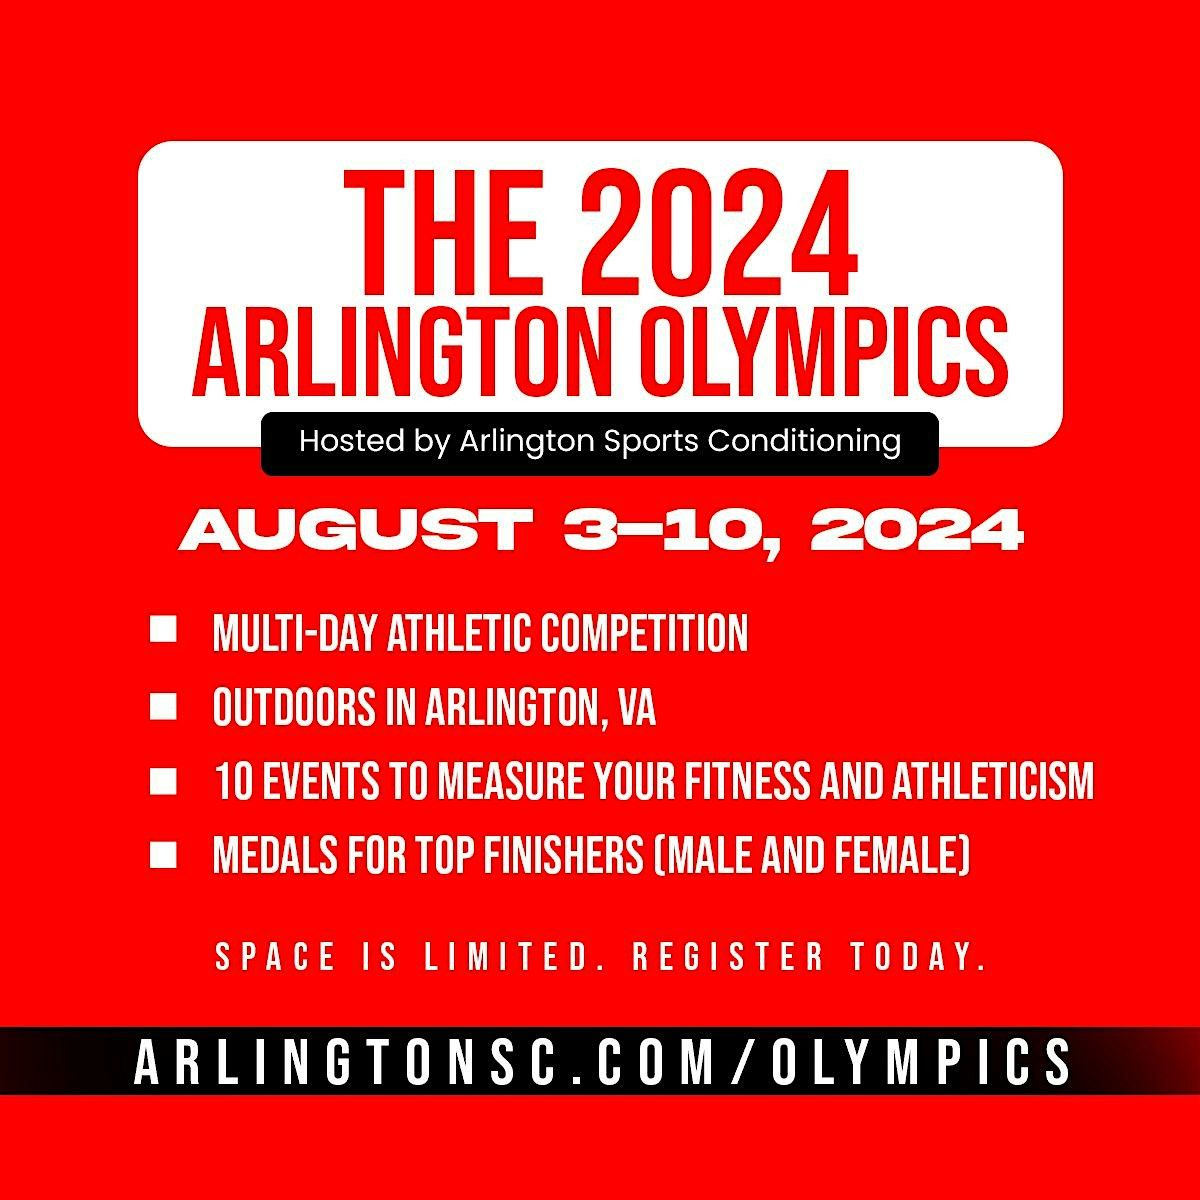 The 2024 Arlington Olympics: Day 4 of 5 (Evening Option)